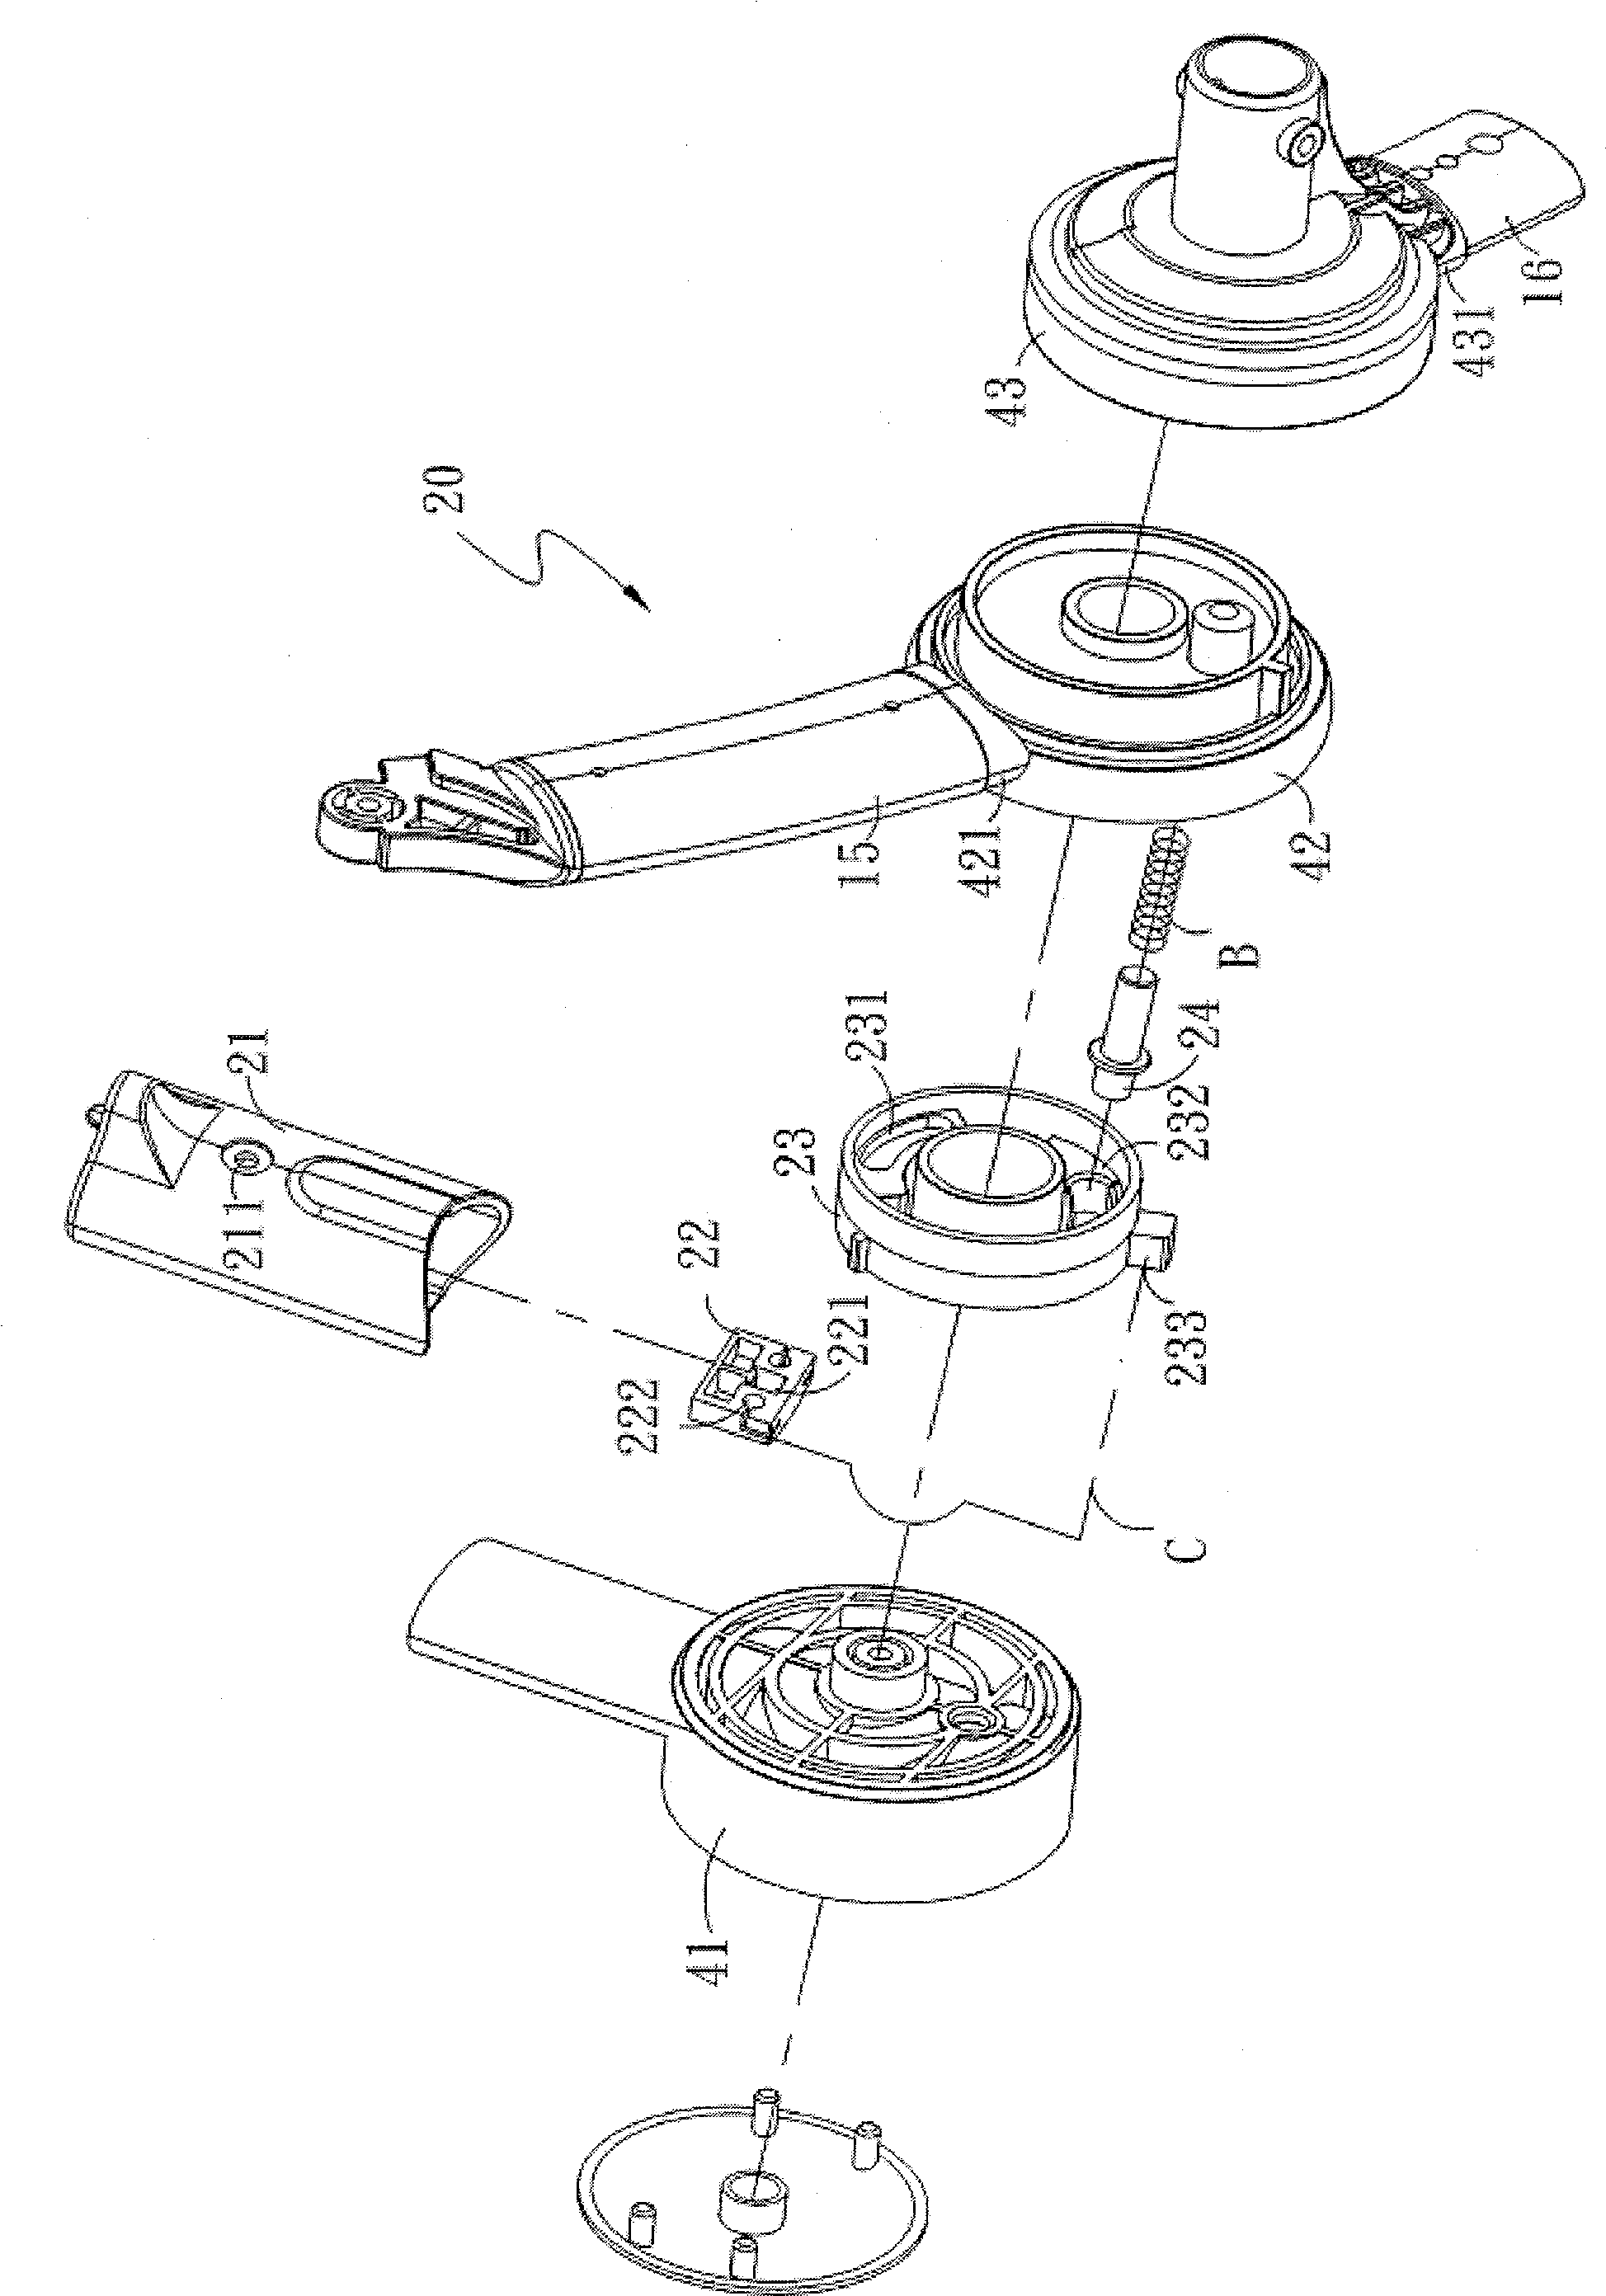 Multifunctional perambulator device